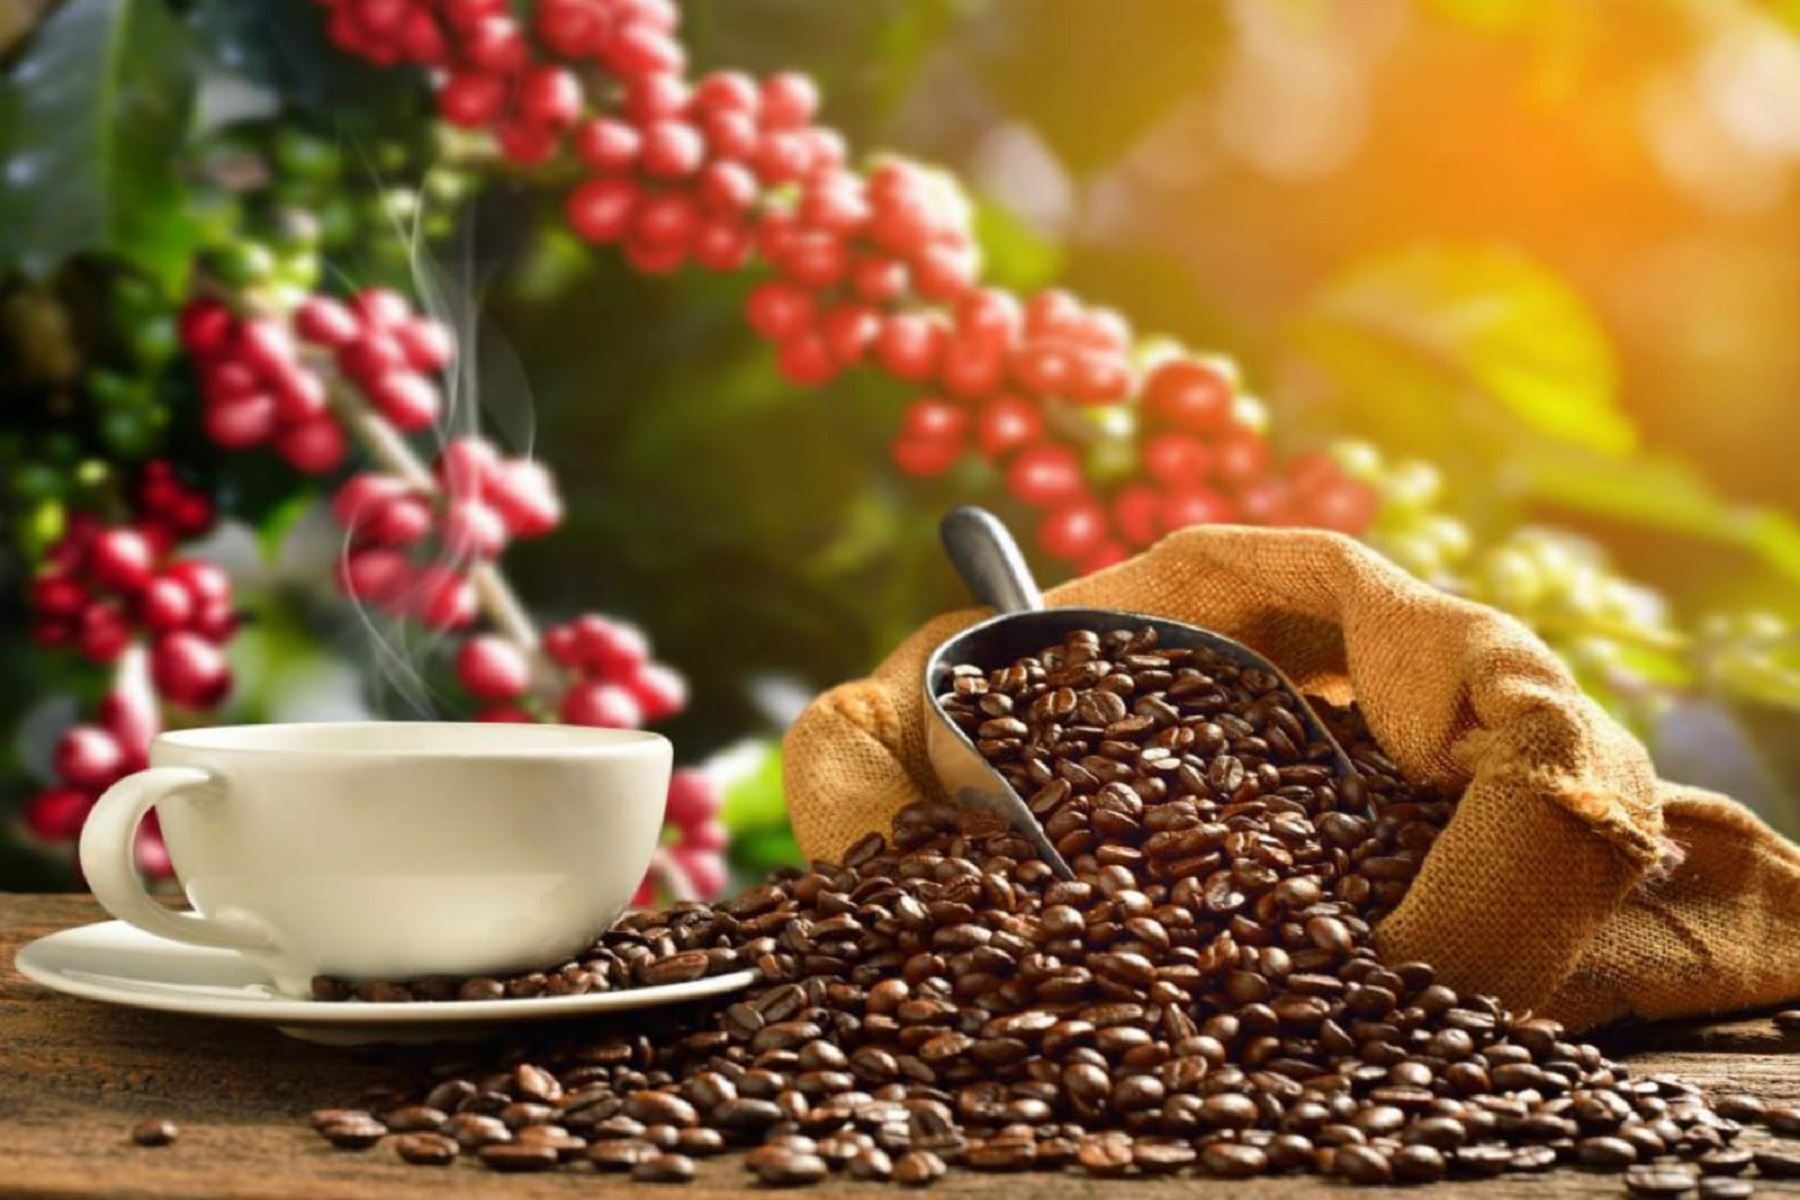 Productores de café solicitan estrategia urgente para continuar exportando a Europea